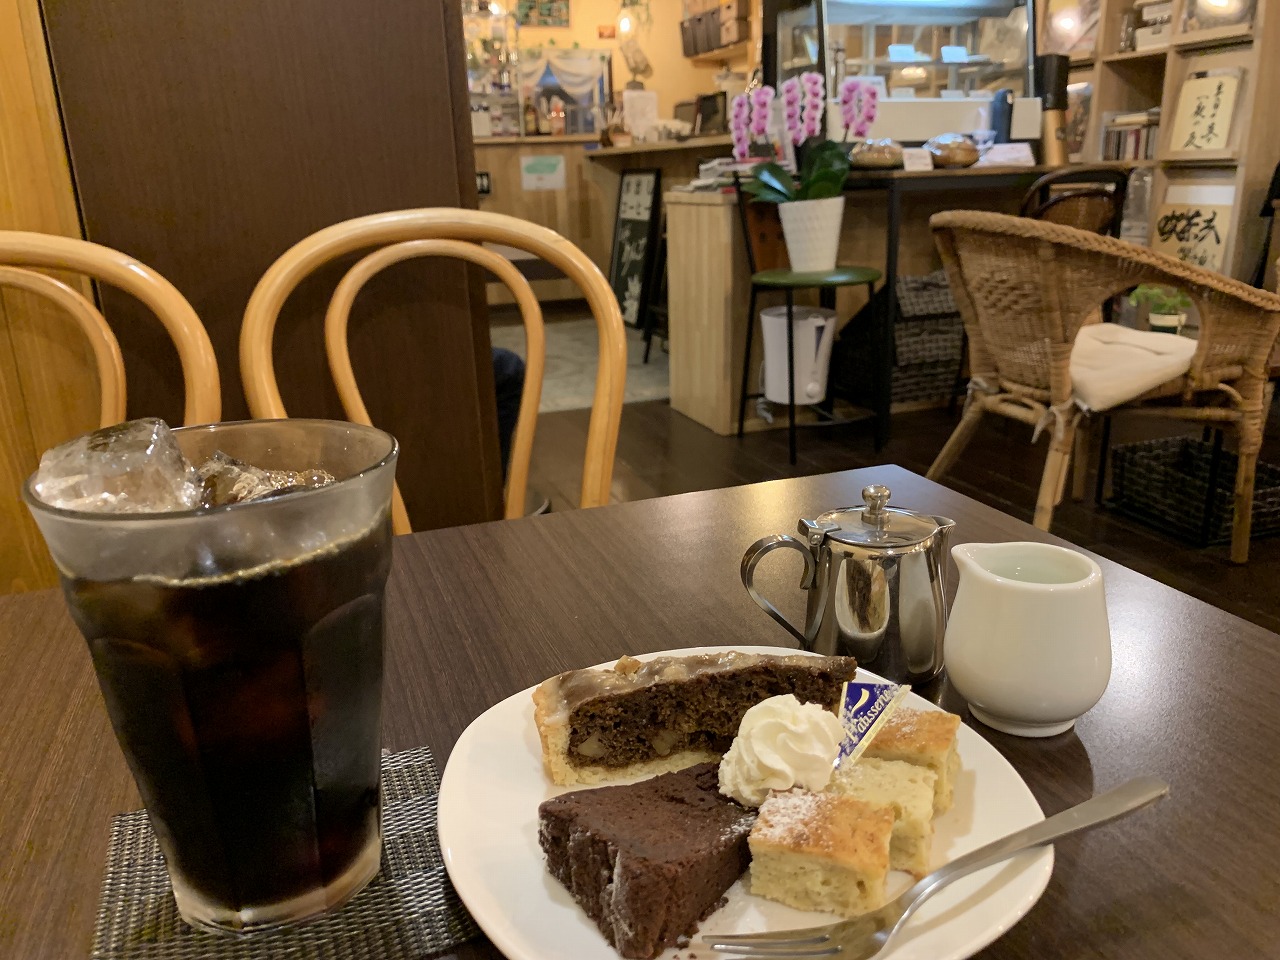 Cafeあんご〜水出しコーヒーと自家製スイーツのお店〜